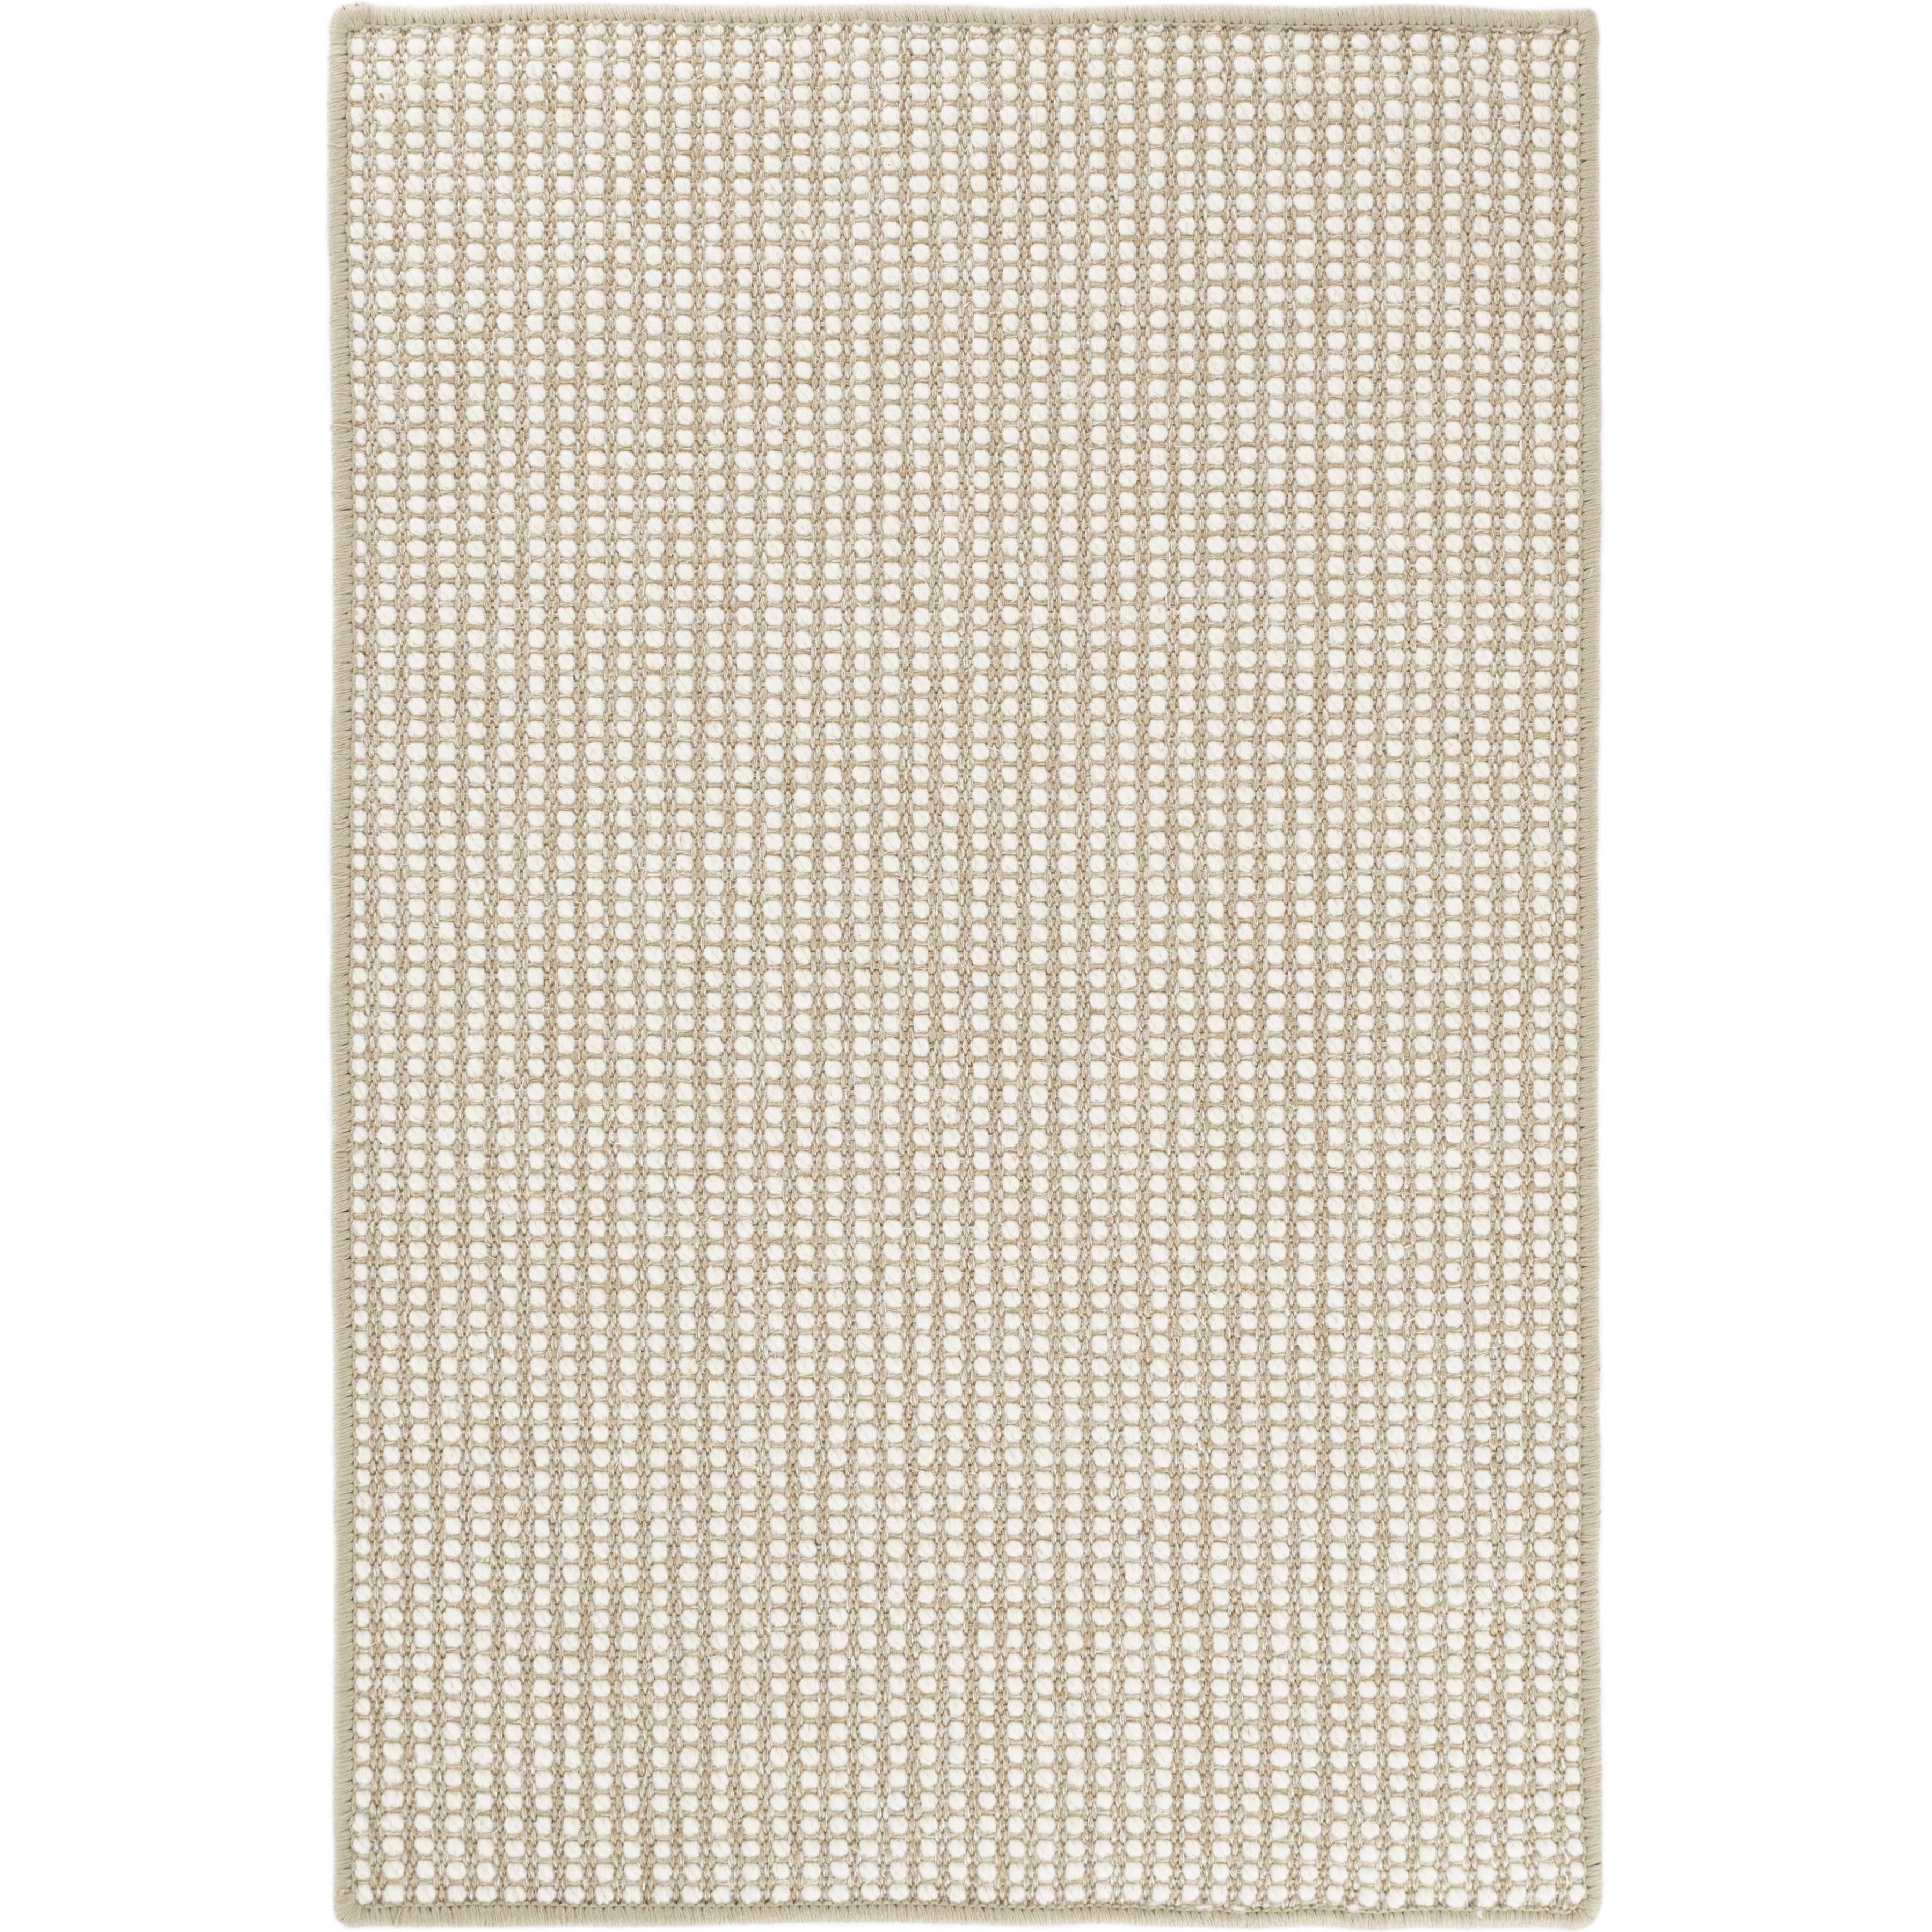 Annie Selke, Pixel Wheat Woven Sisal/Wool Rug